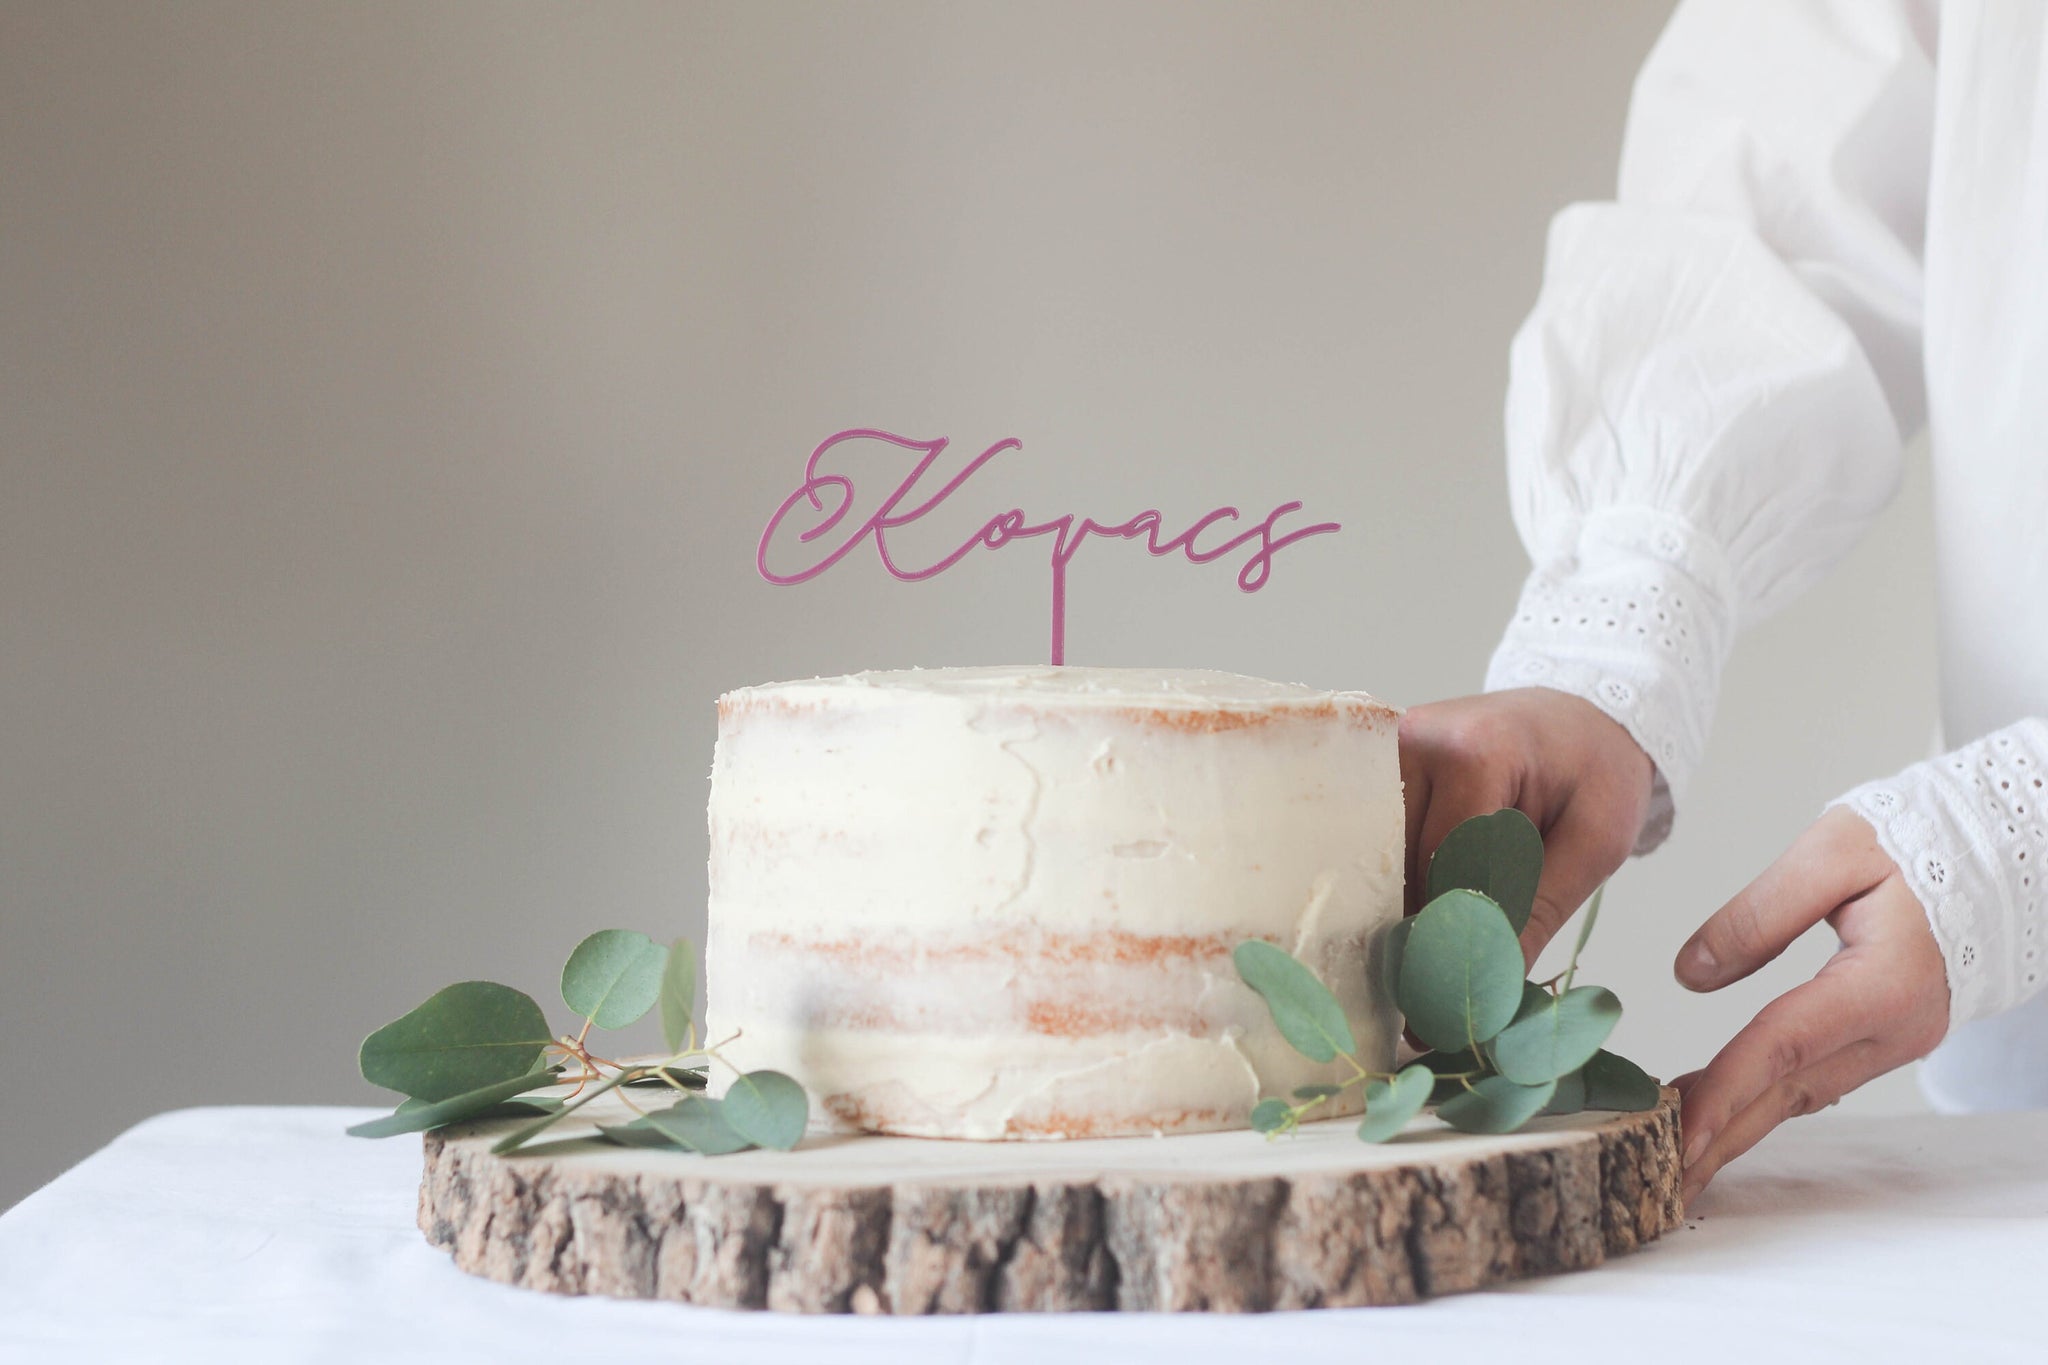 Surname Wedding Cake Topper - A Minimal Wedding Cake Topper That Compliments Any Wedding Cake And Decor